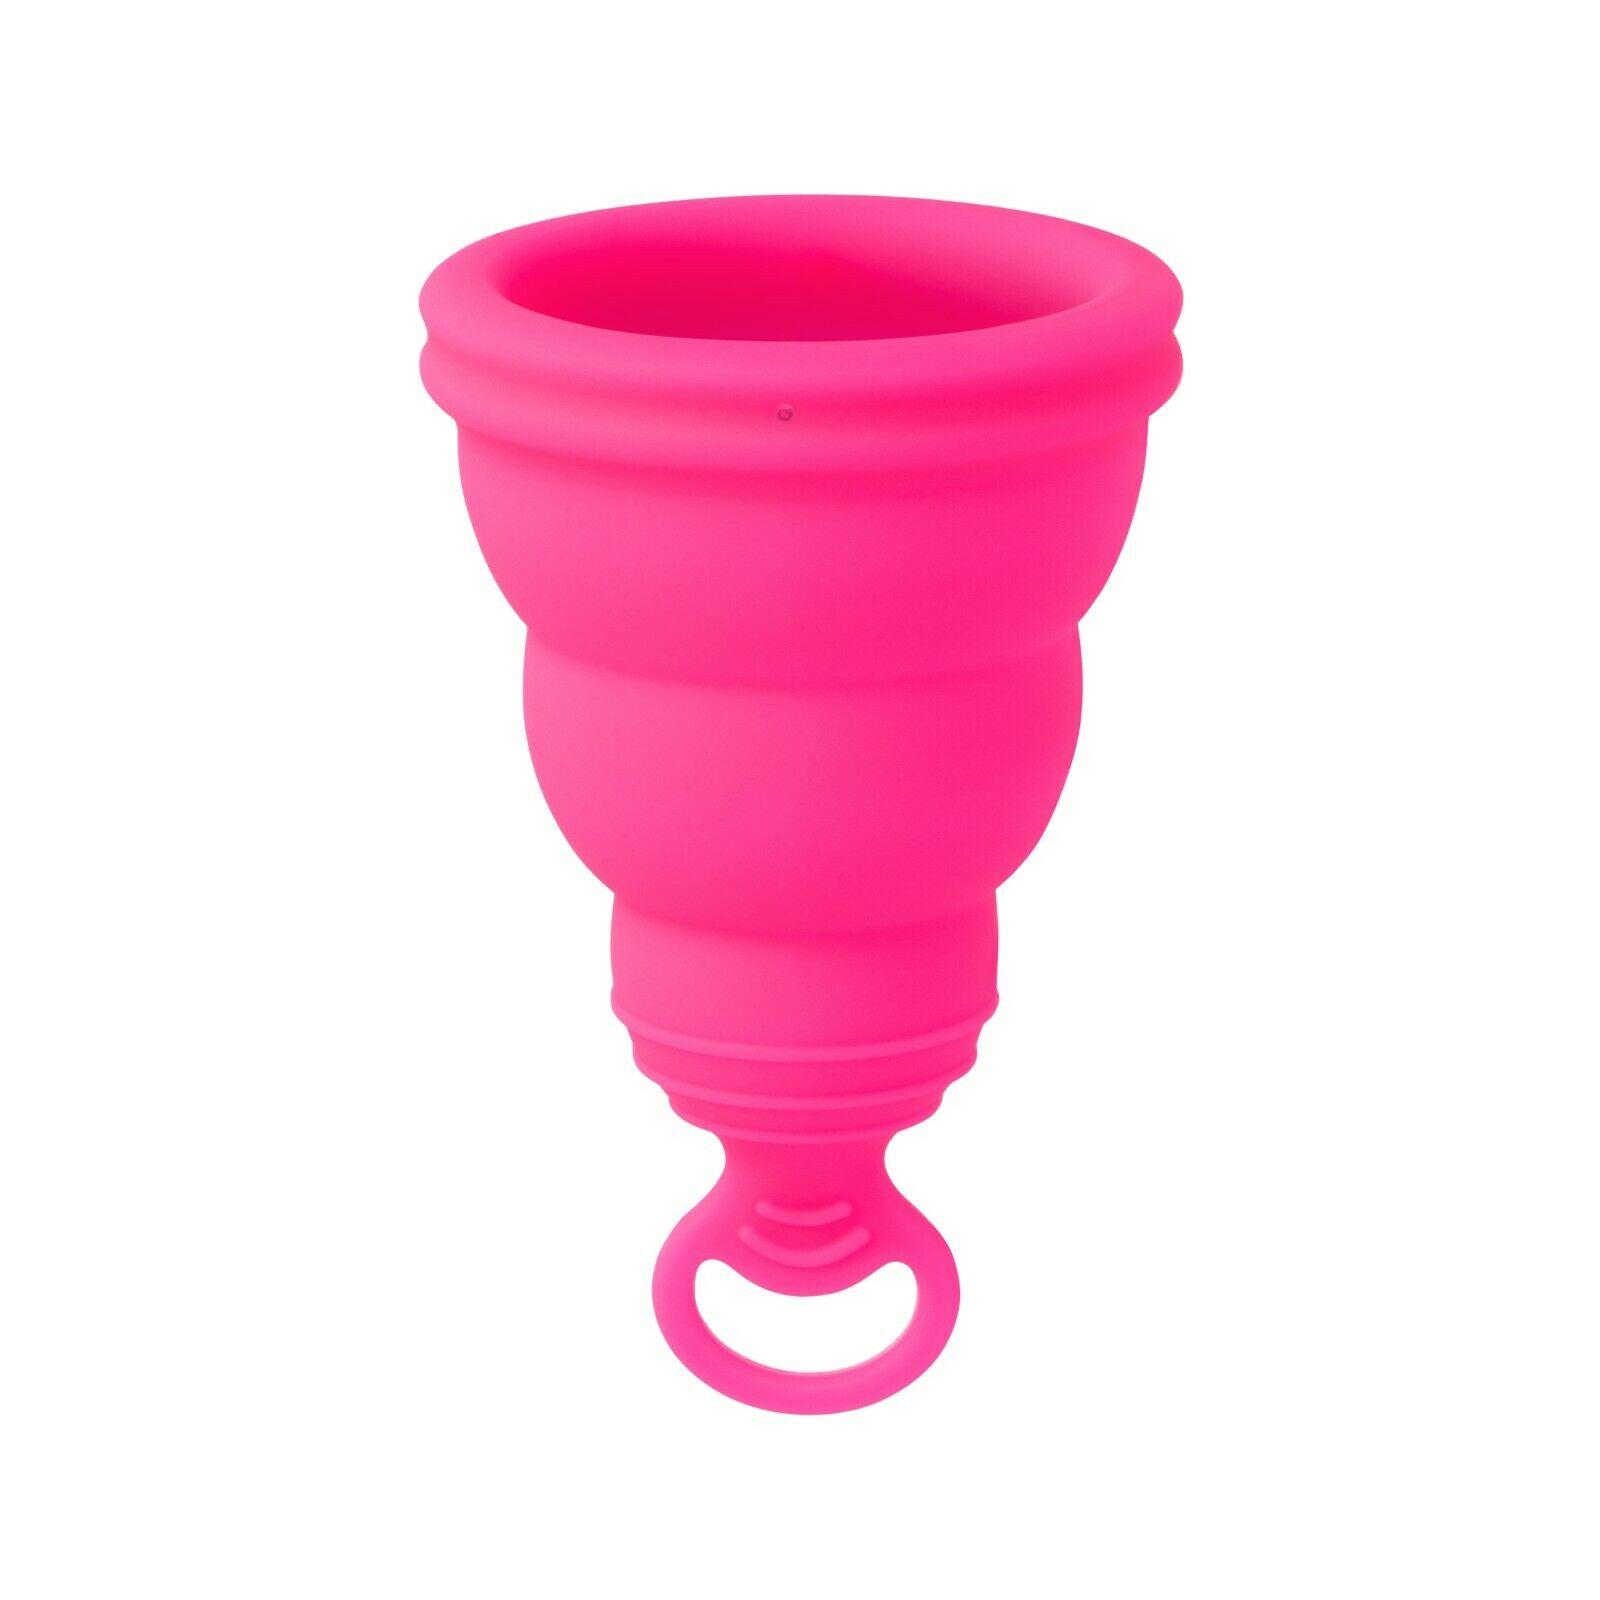 Selected image for INTIMINA Menstrualna čašica Lily cup one